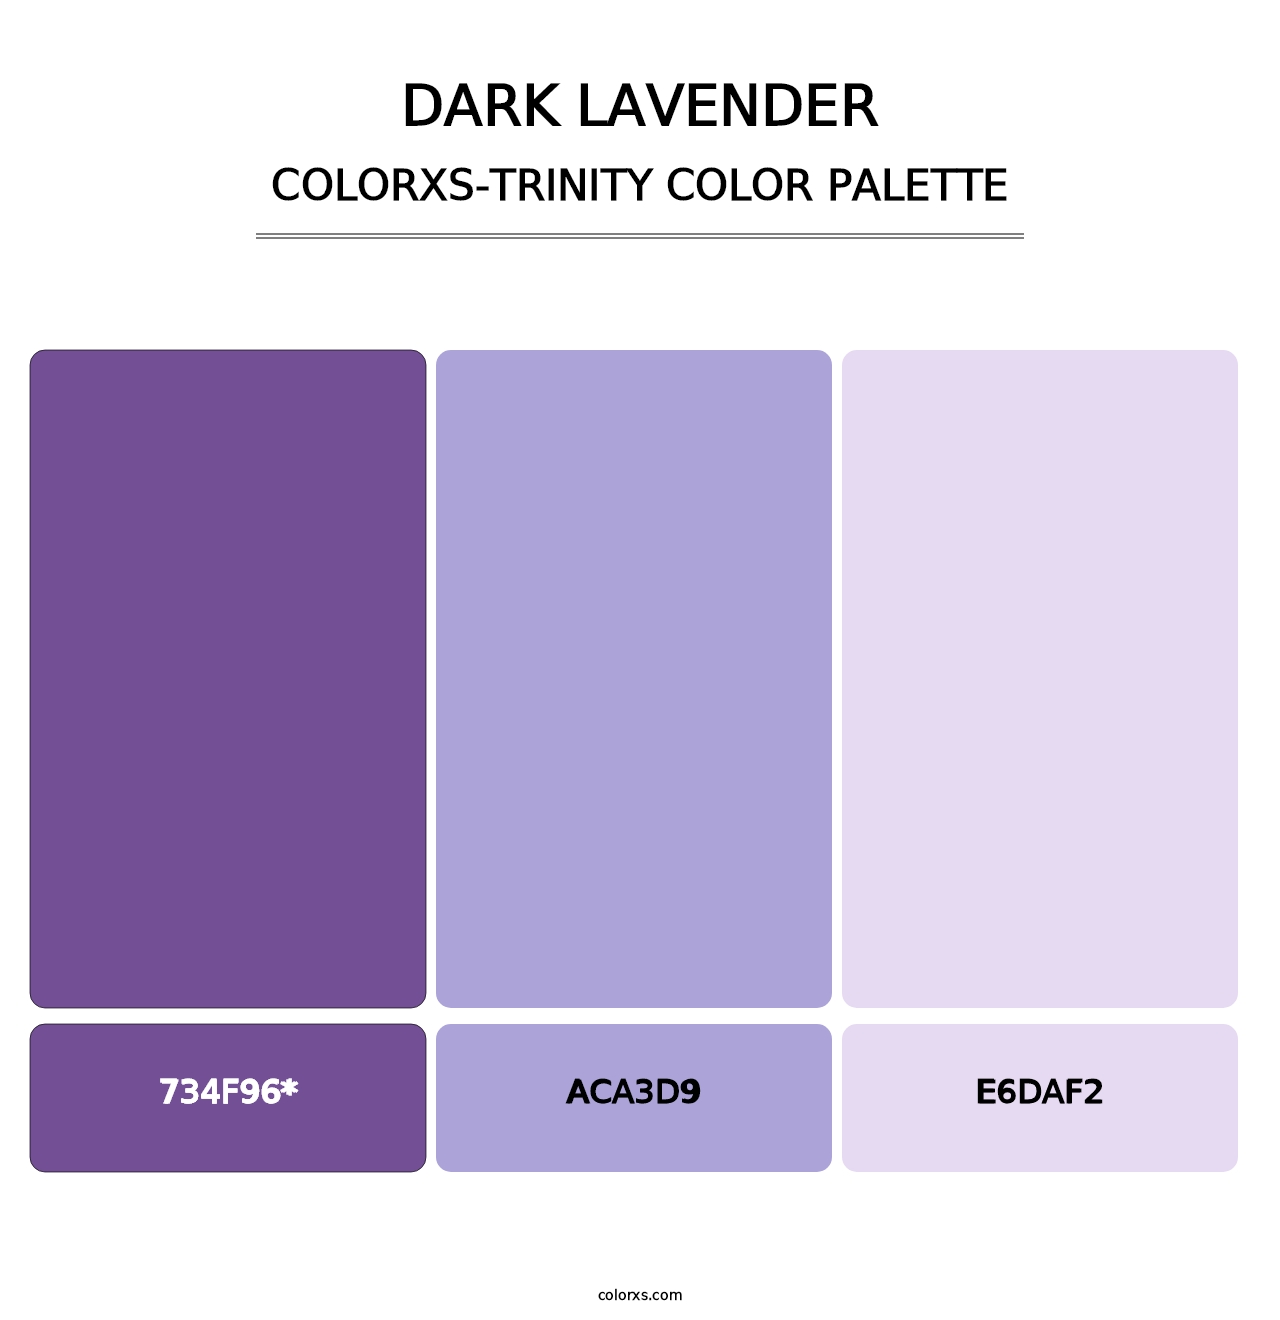 Dark Lavender - Colorxs Trinity Palette